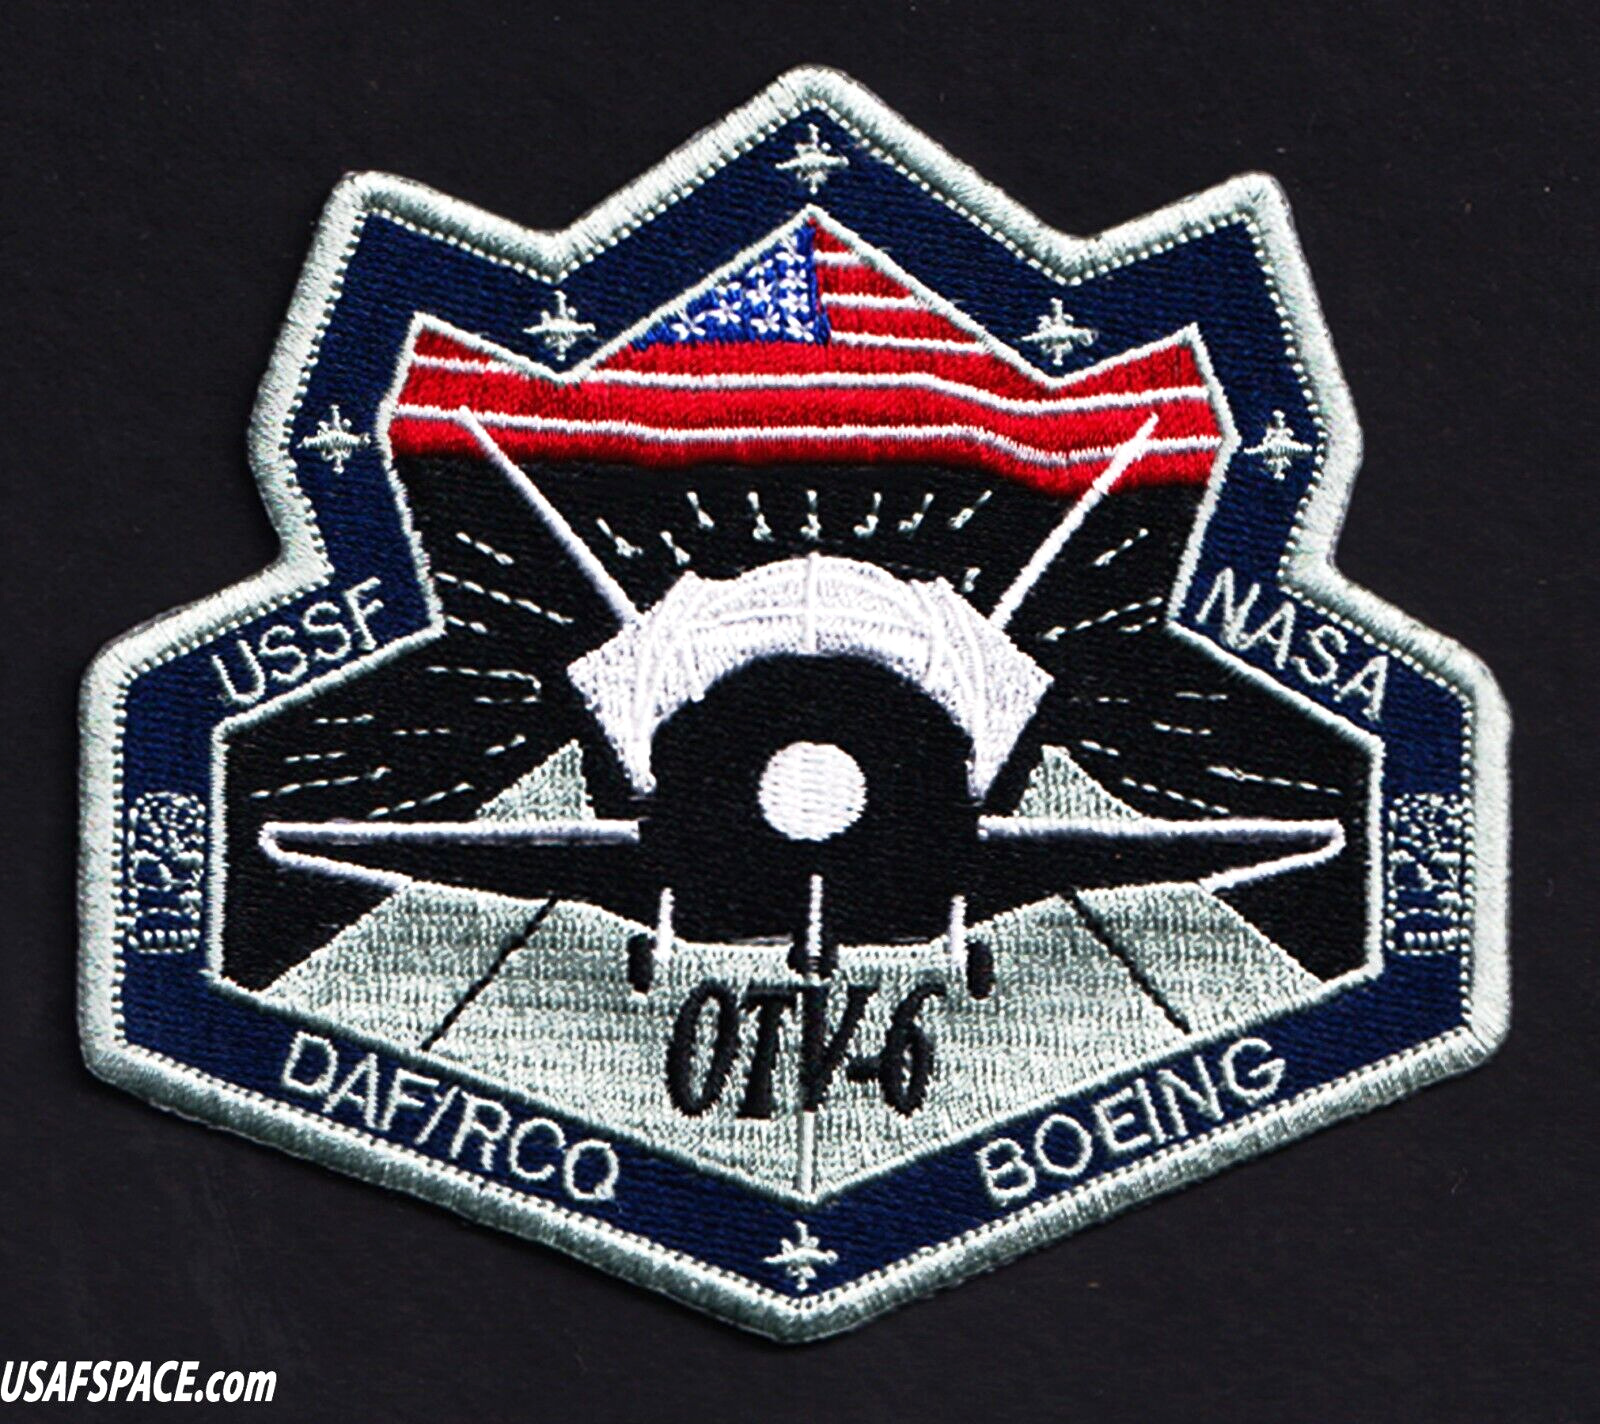 OTV-6 -X-37B- USSF-7 NASA DAF/RCO BOEING ATLAS V DOD Classified Mission PATCH